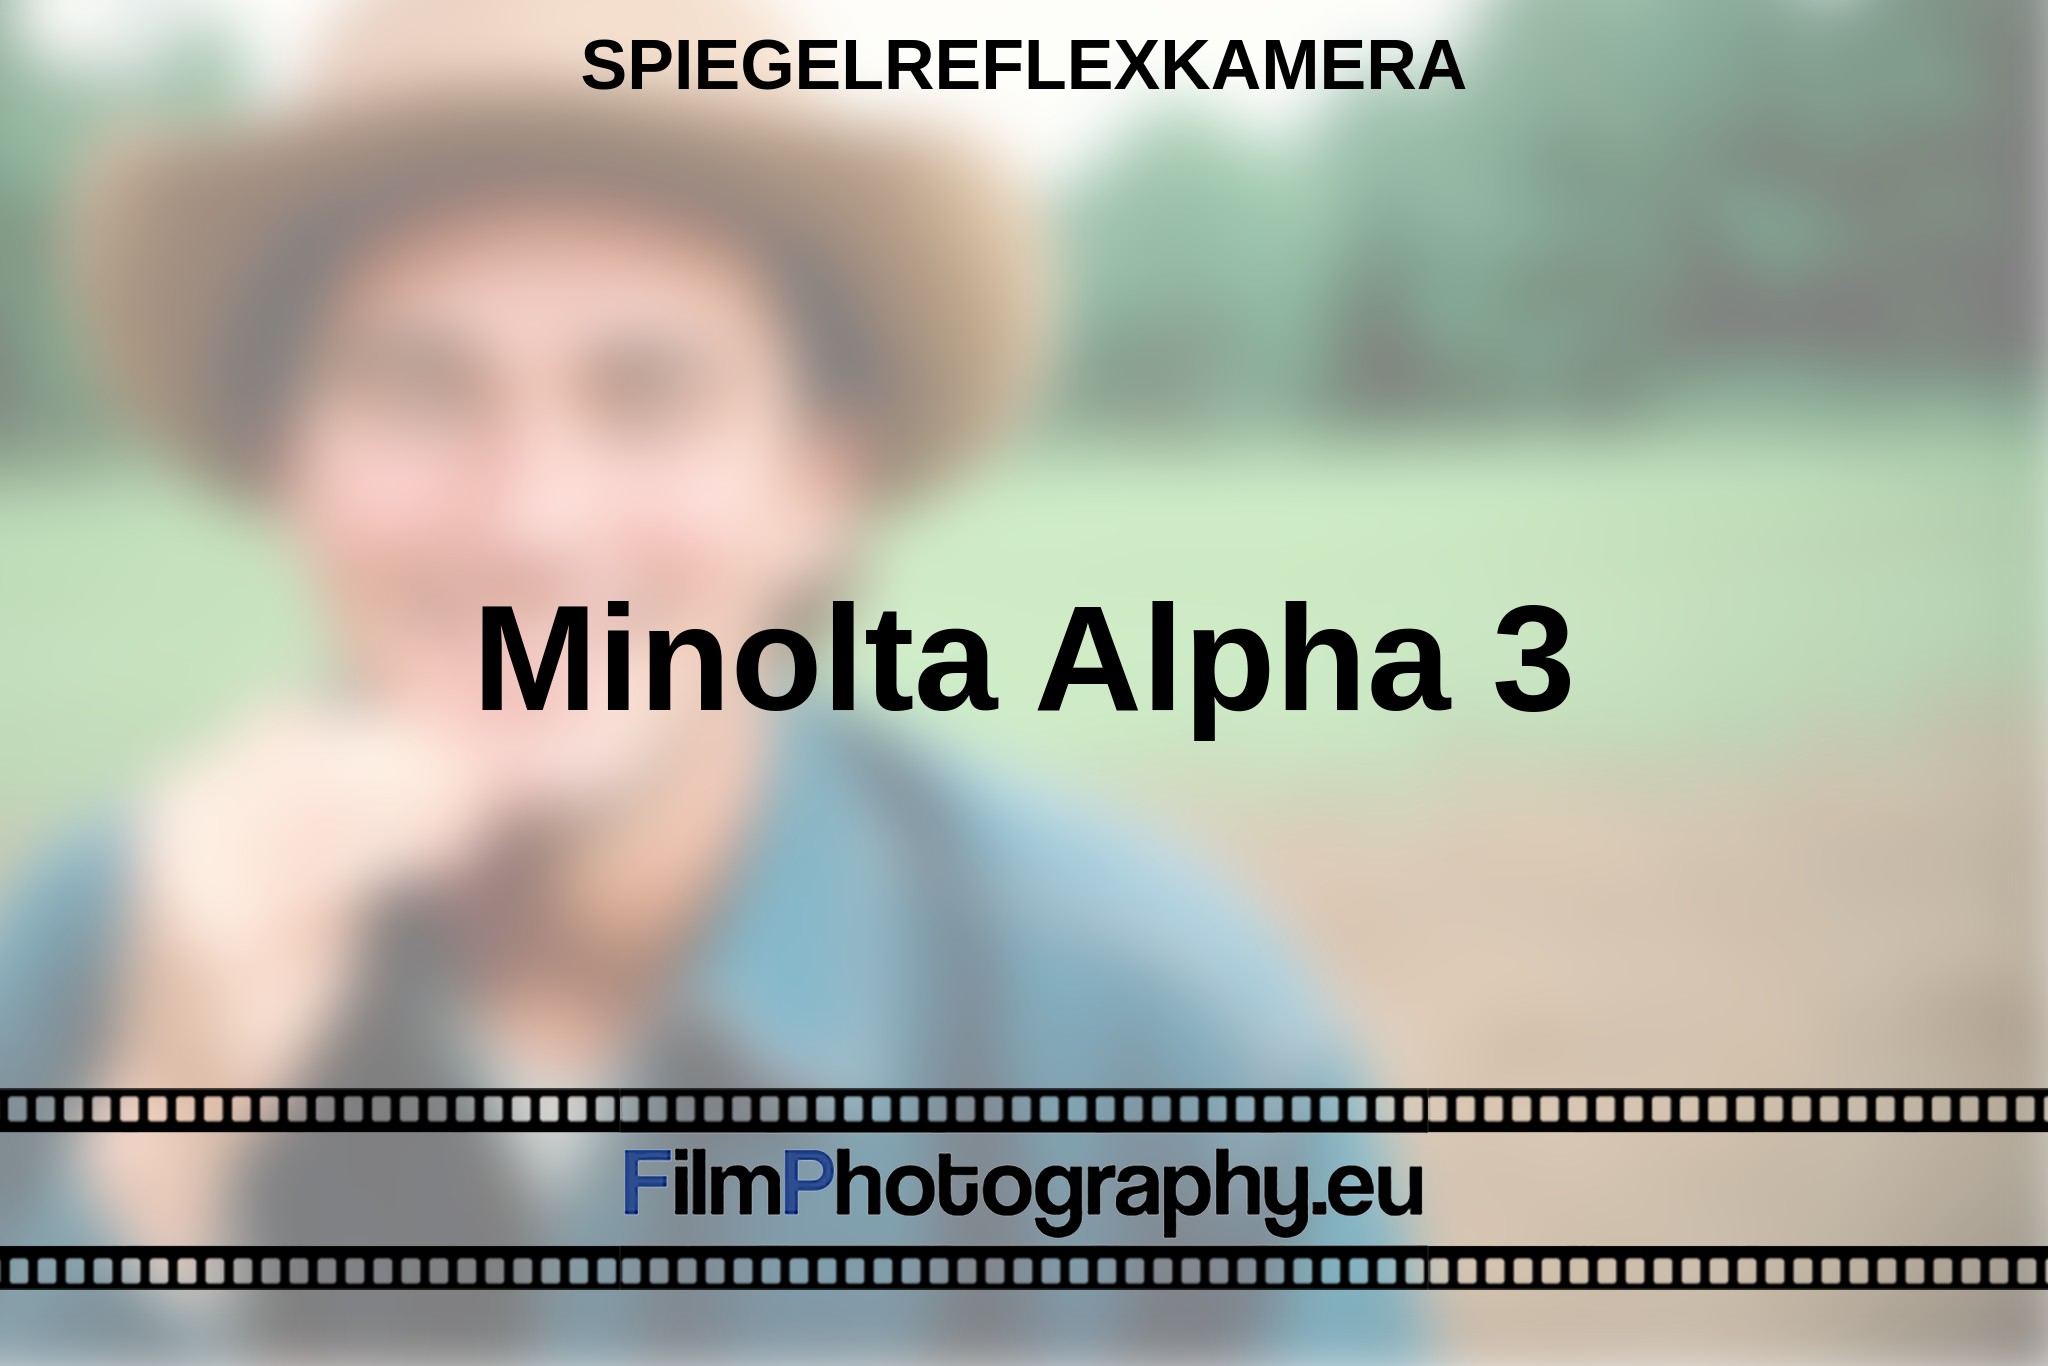 minolta-alpha-3-spiegelreflexkamera-bnv.jpg